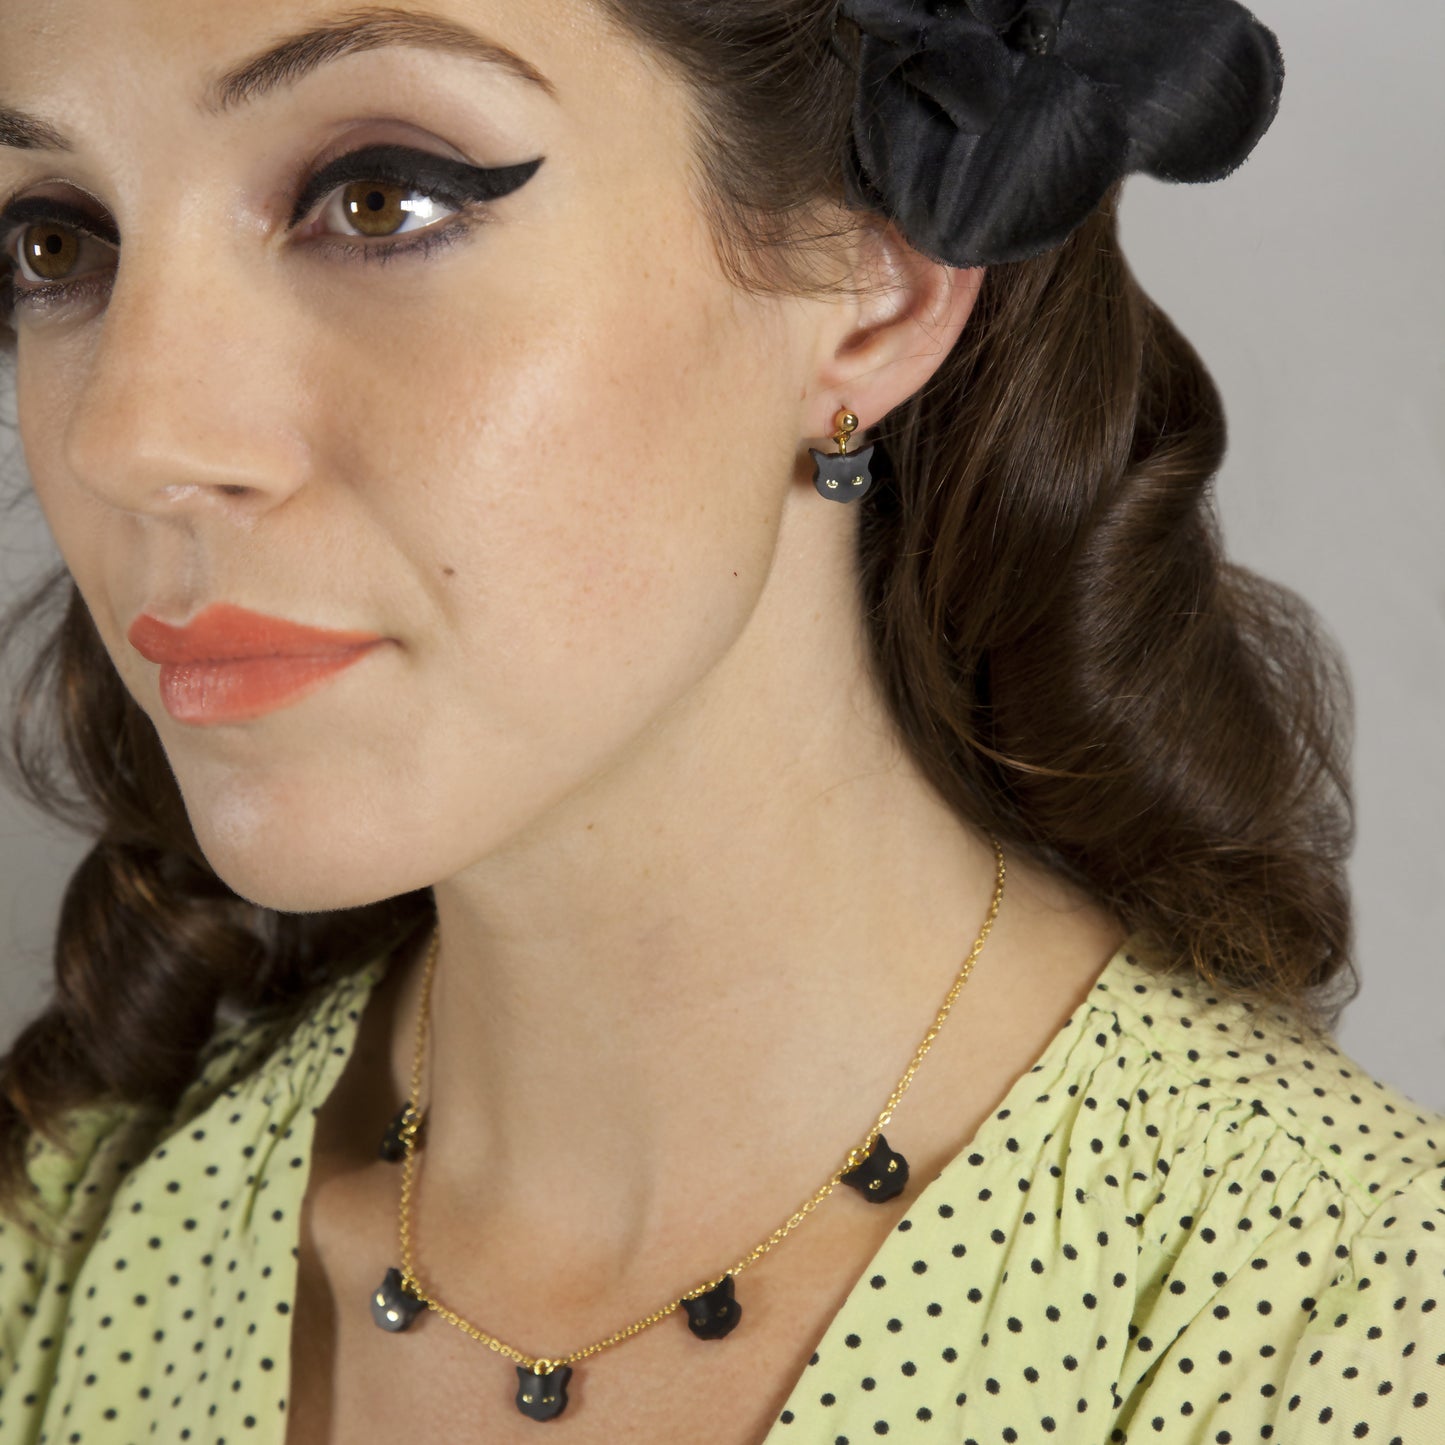 Model wearing little black cat head charm stud earrings & matching charm necklace